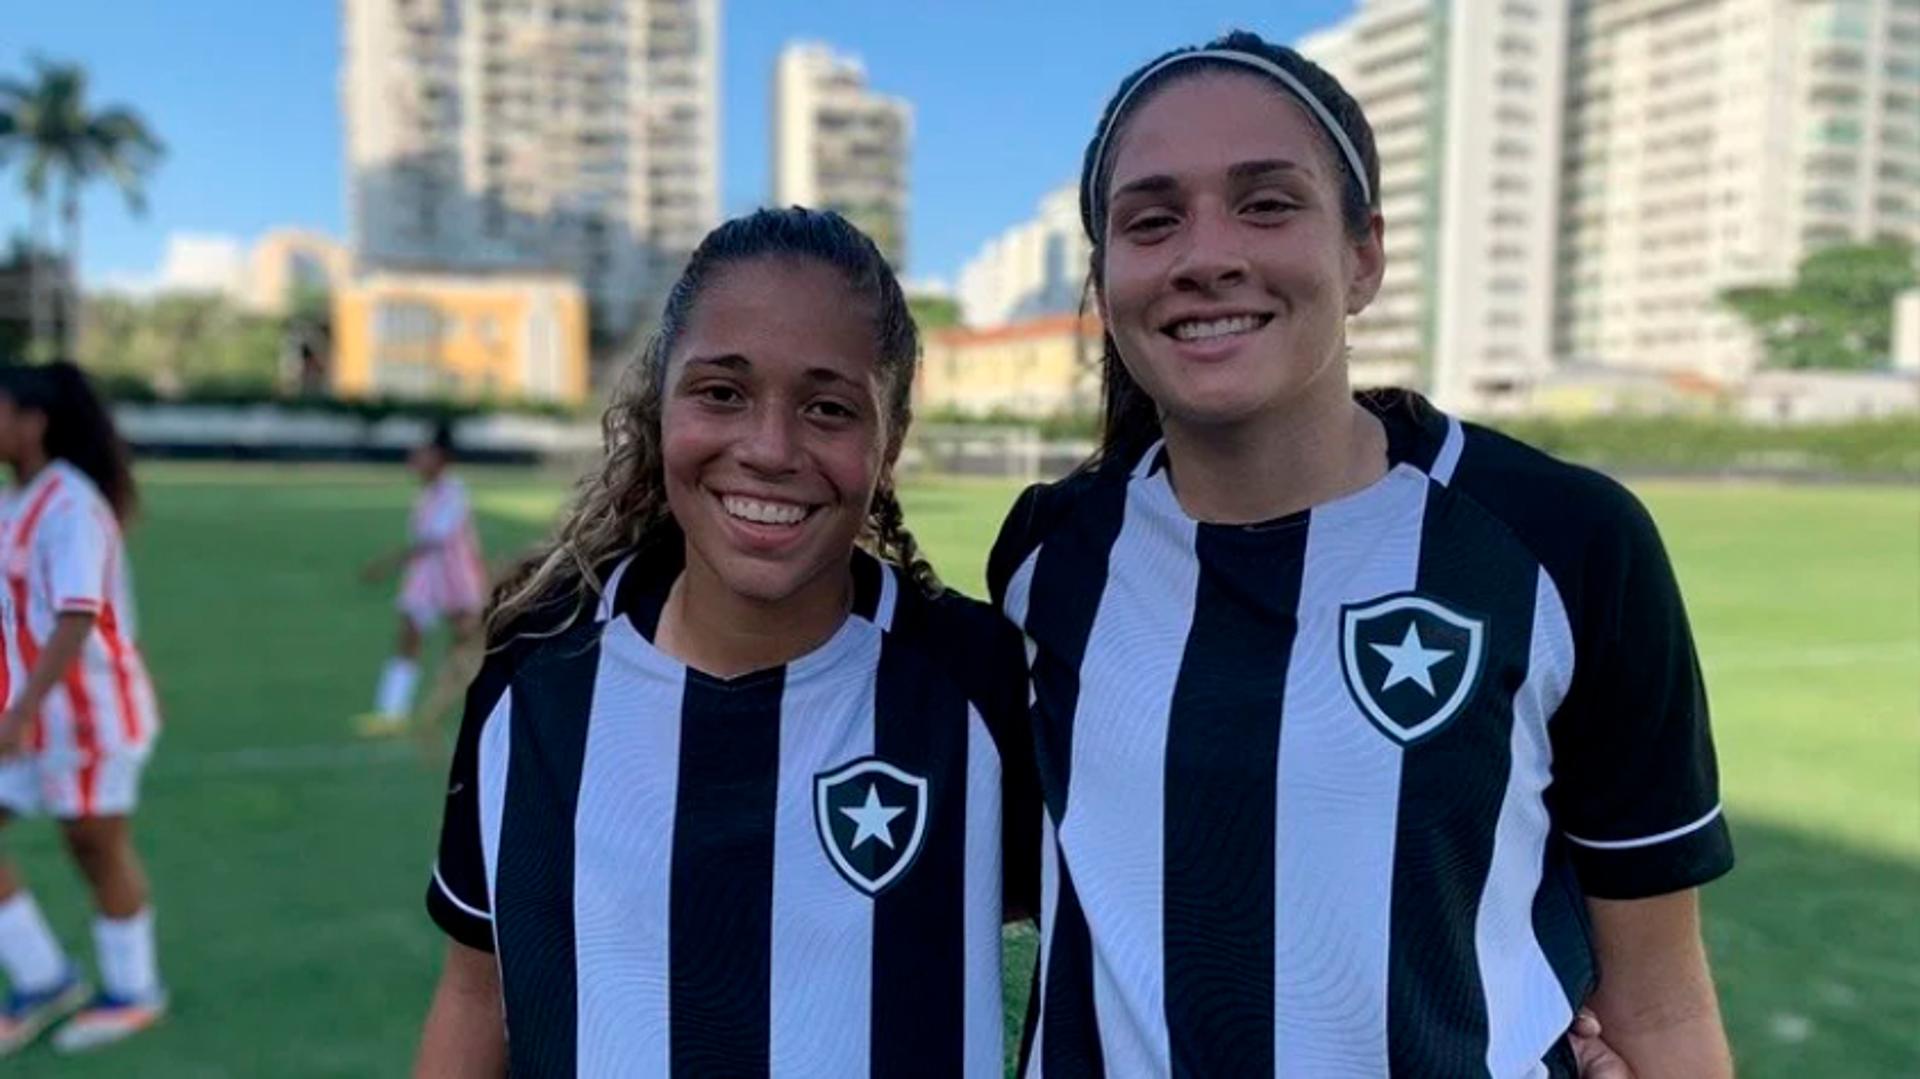 Botafogo Feminino